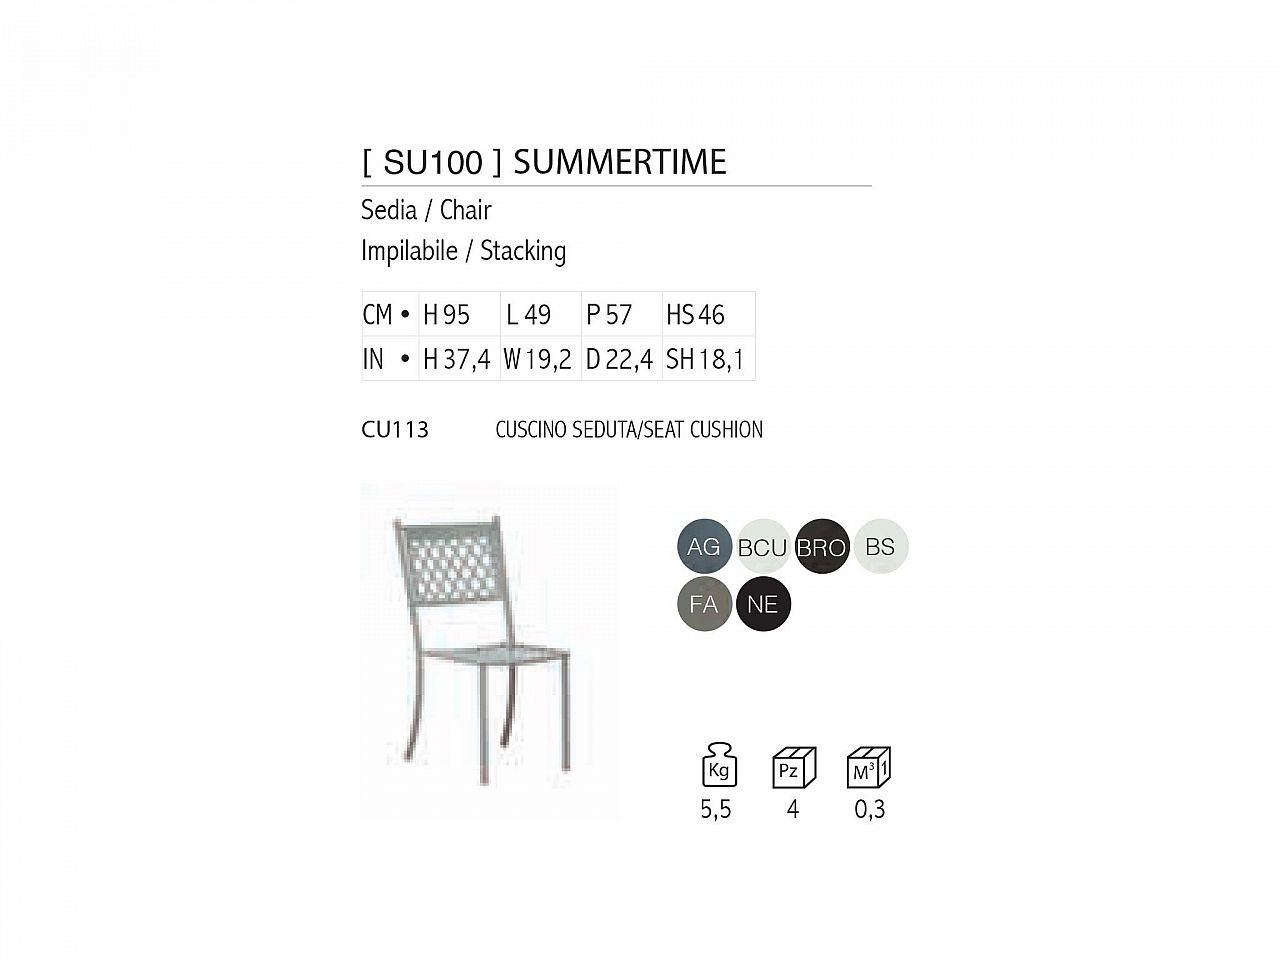 Sedia Summertime - 1